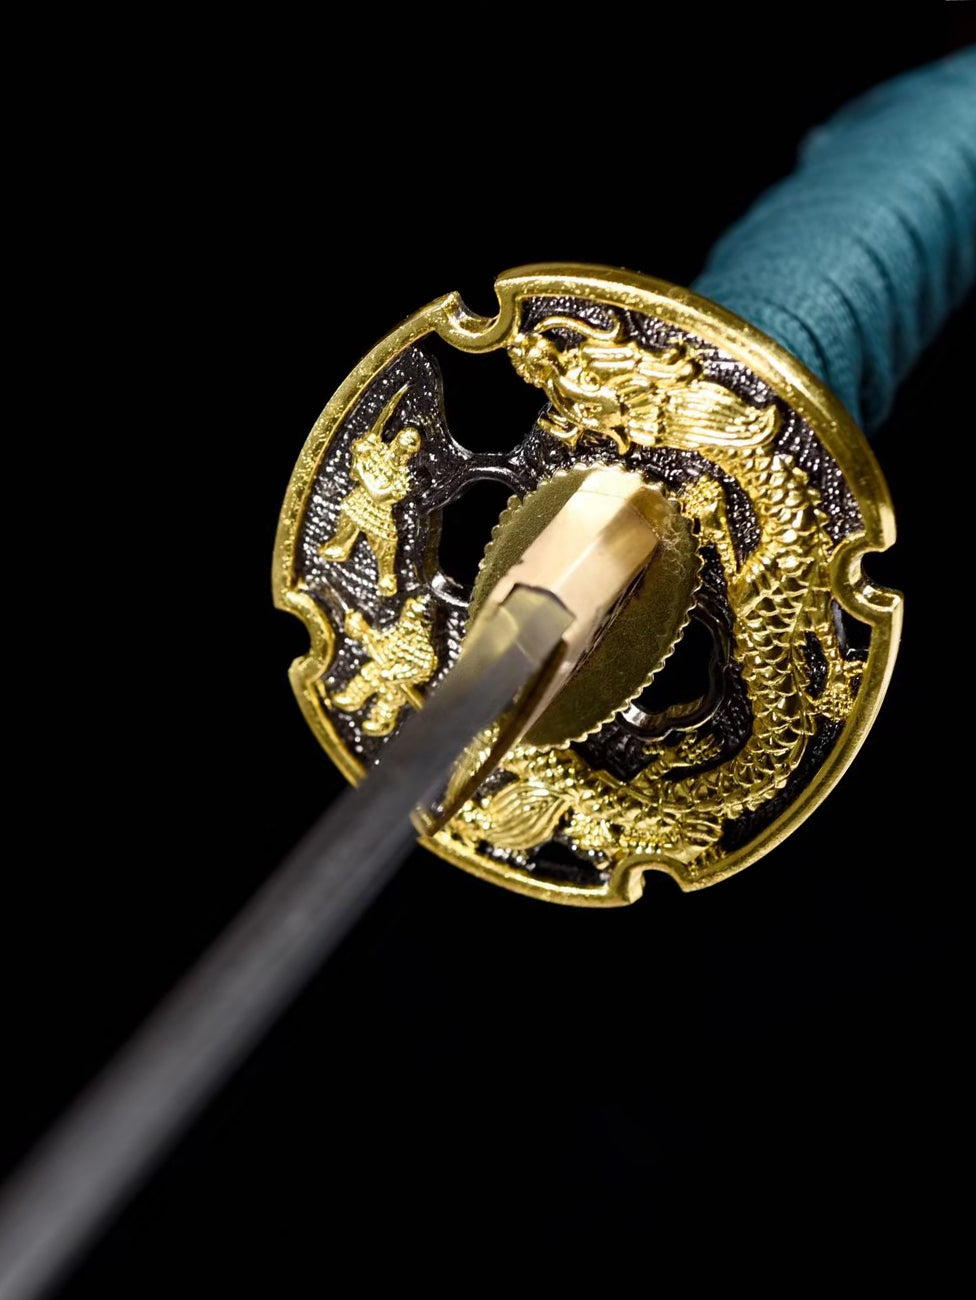 Artisan Japanese Samurai Sword Mirror-like Blade, Japanese Sword Collect